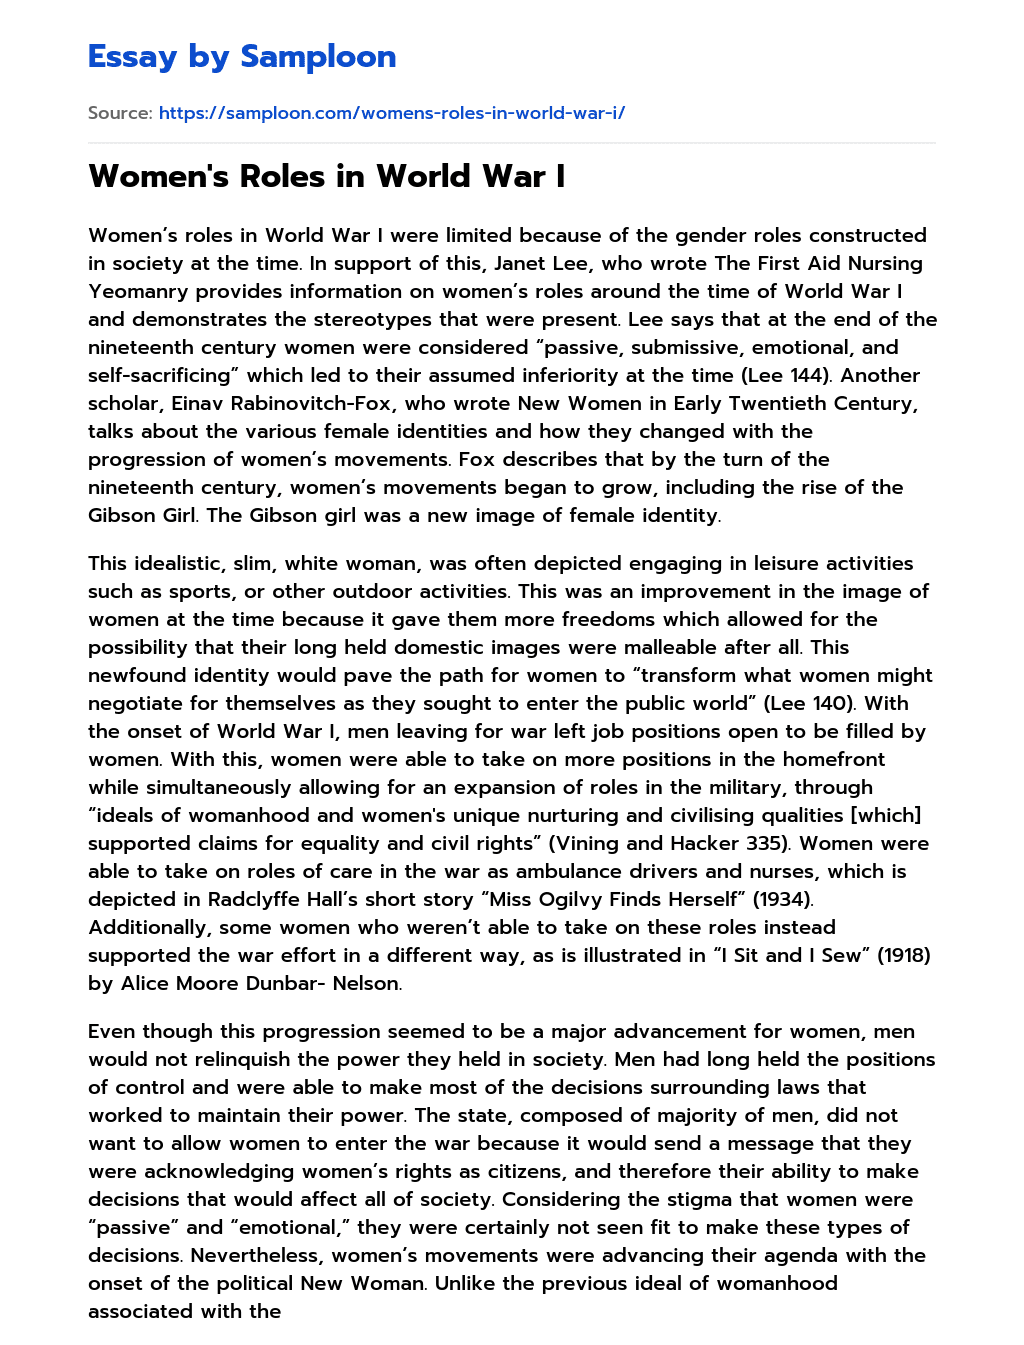 Women’s Roles in World War I essay